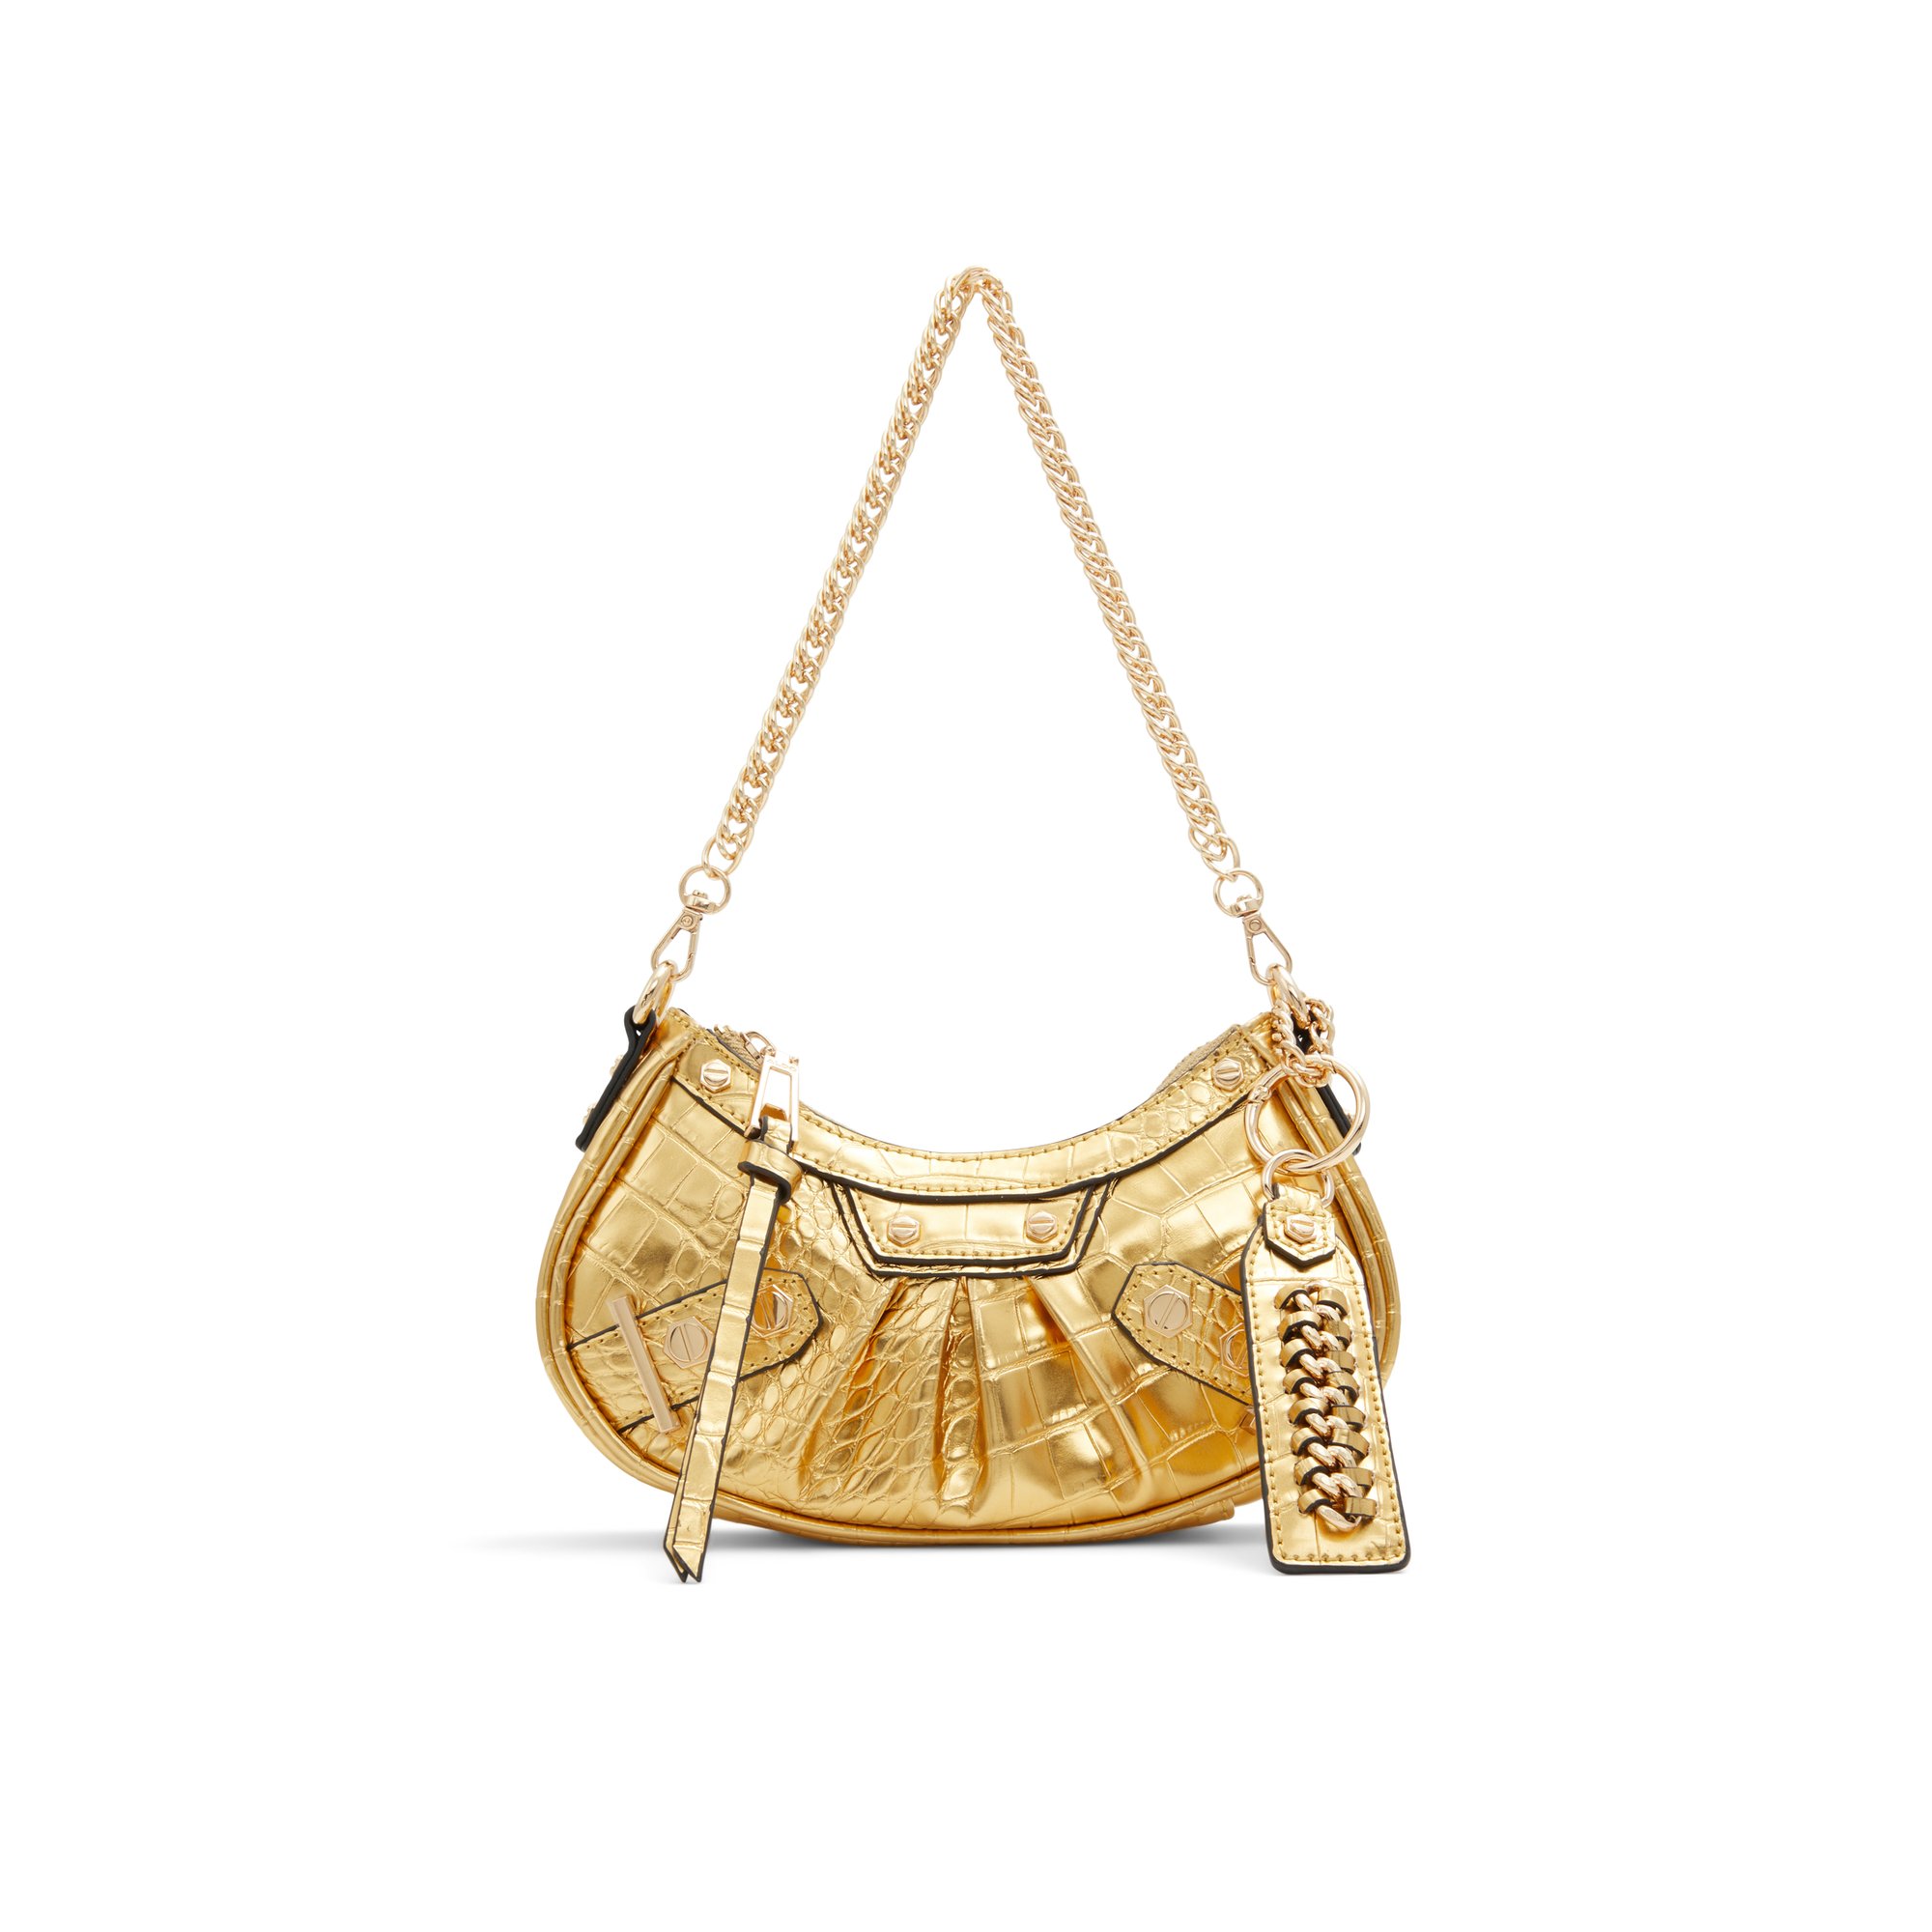 ALDO Fraydax - Women's Shoulder Bag Handbag - Gold